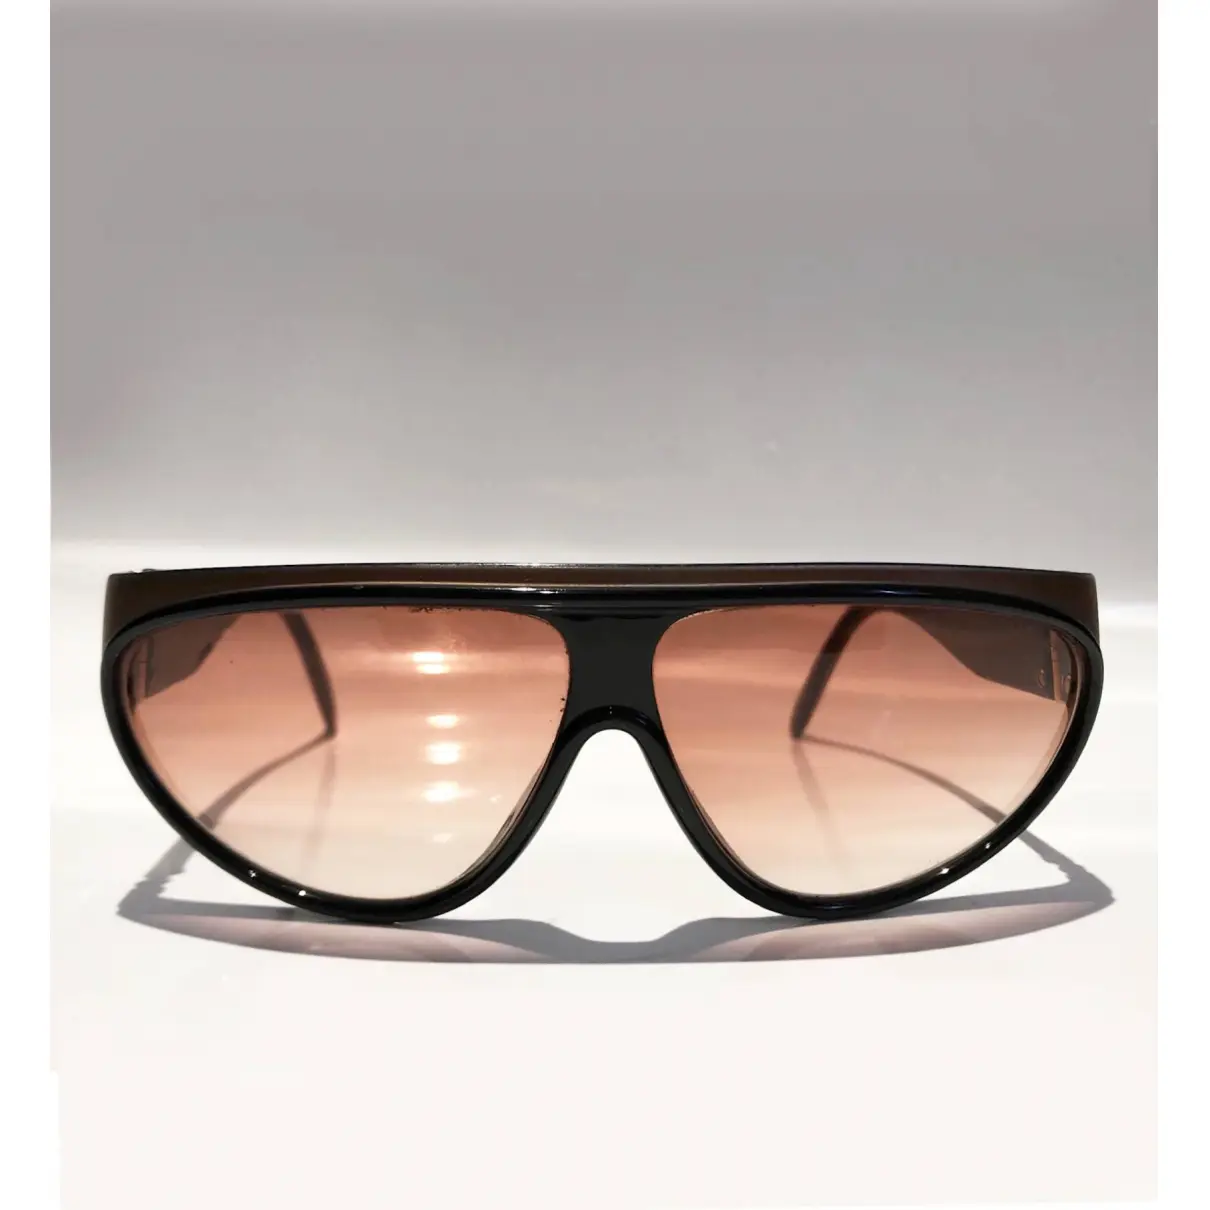 Buy Yves Saint Laurent Aviator sunglasses online - Vintage